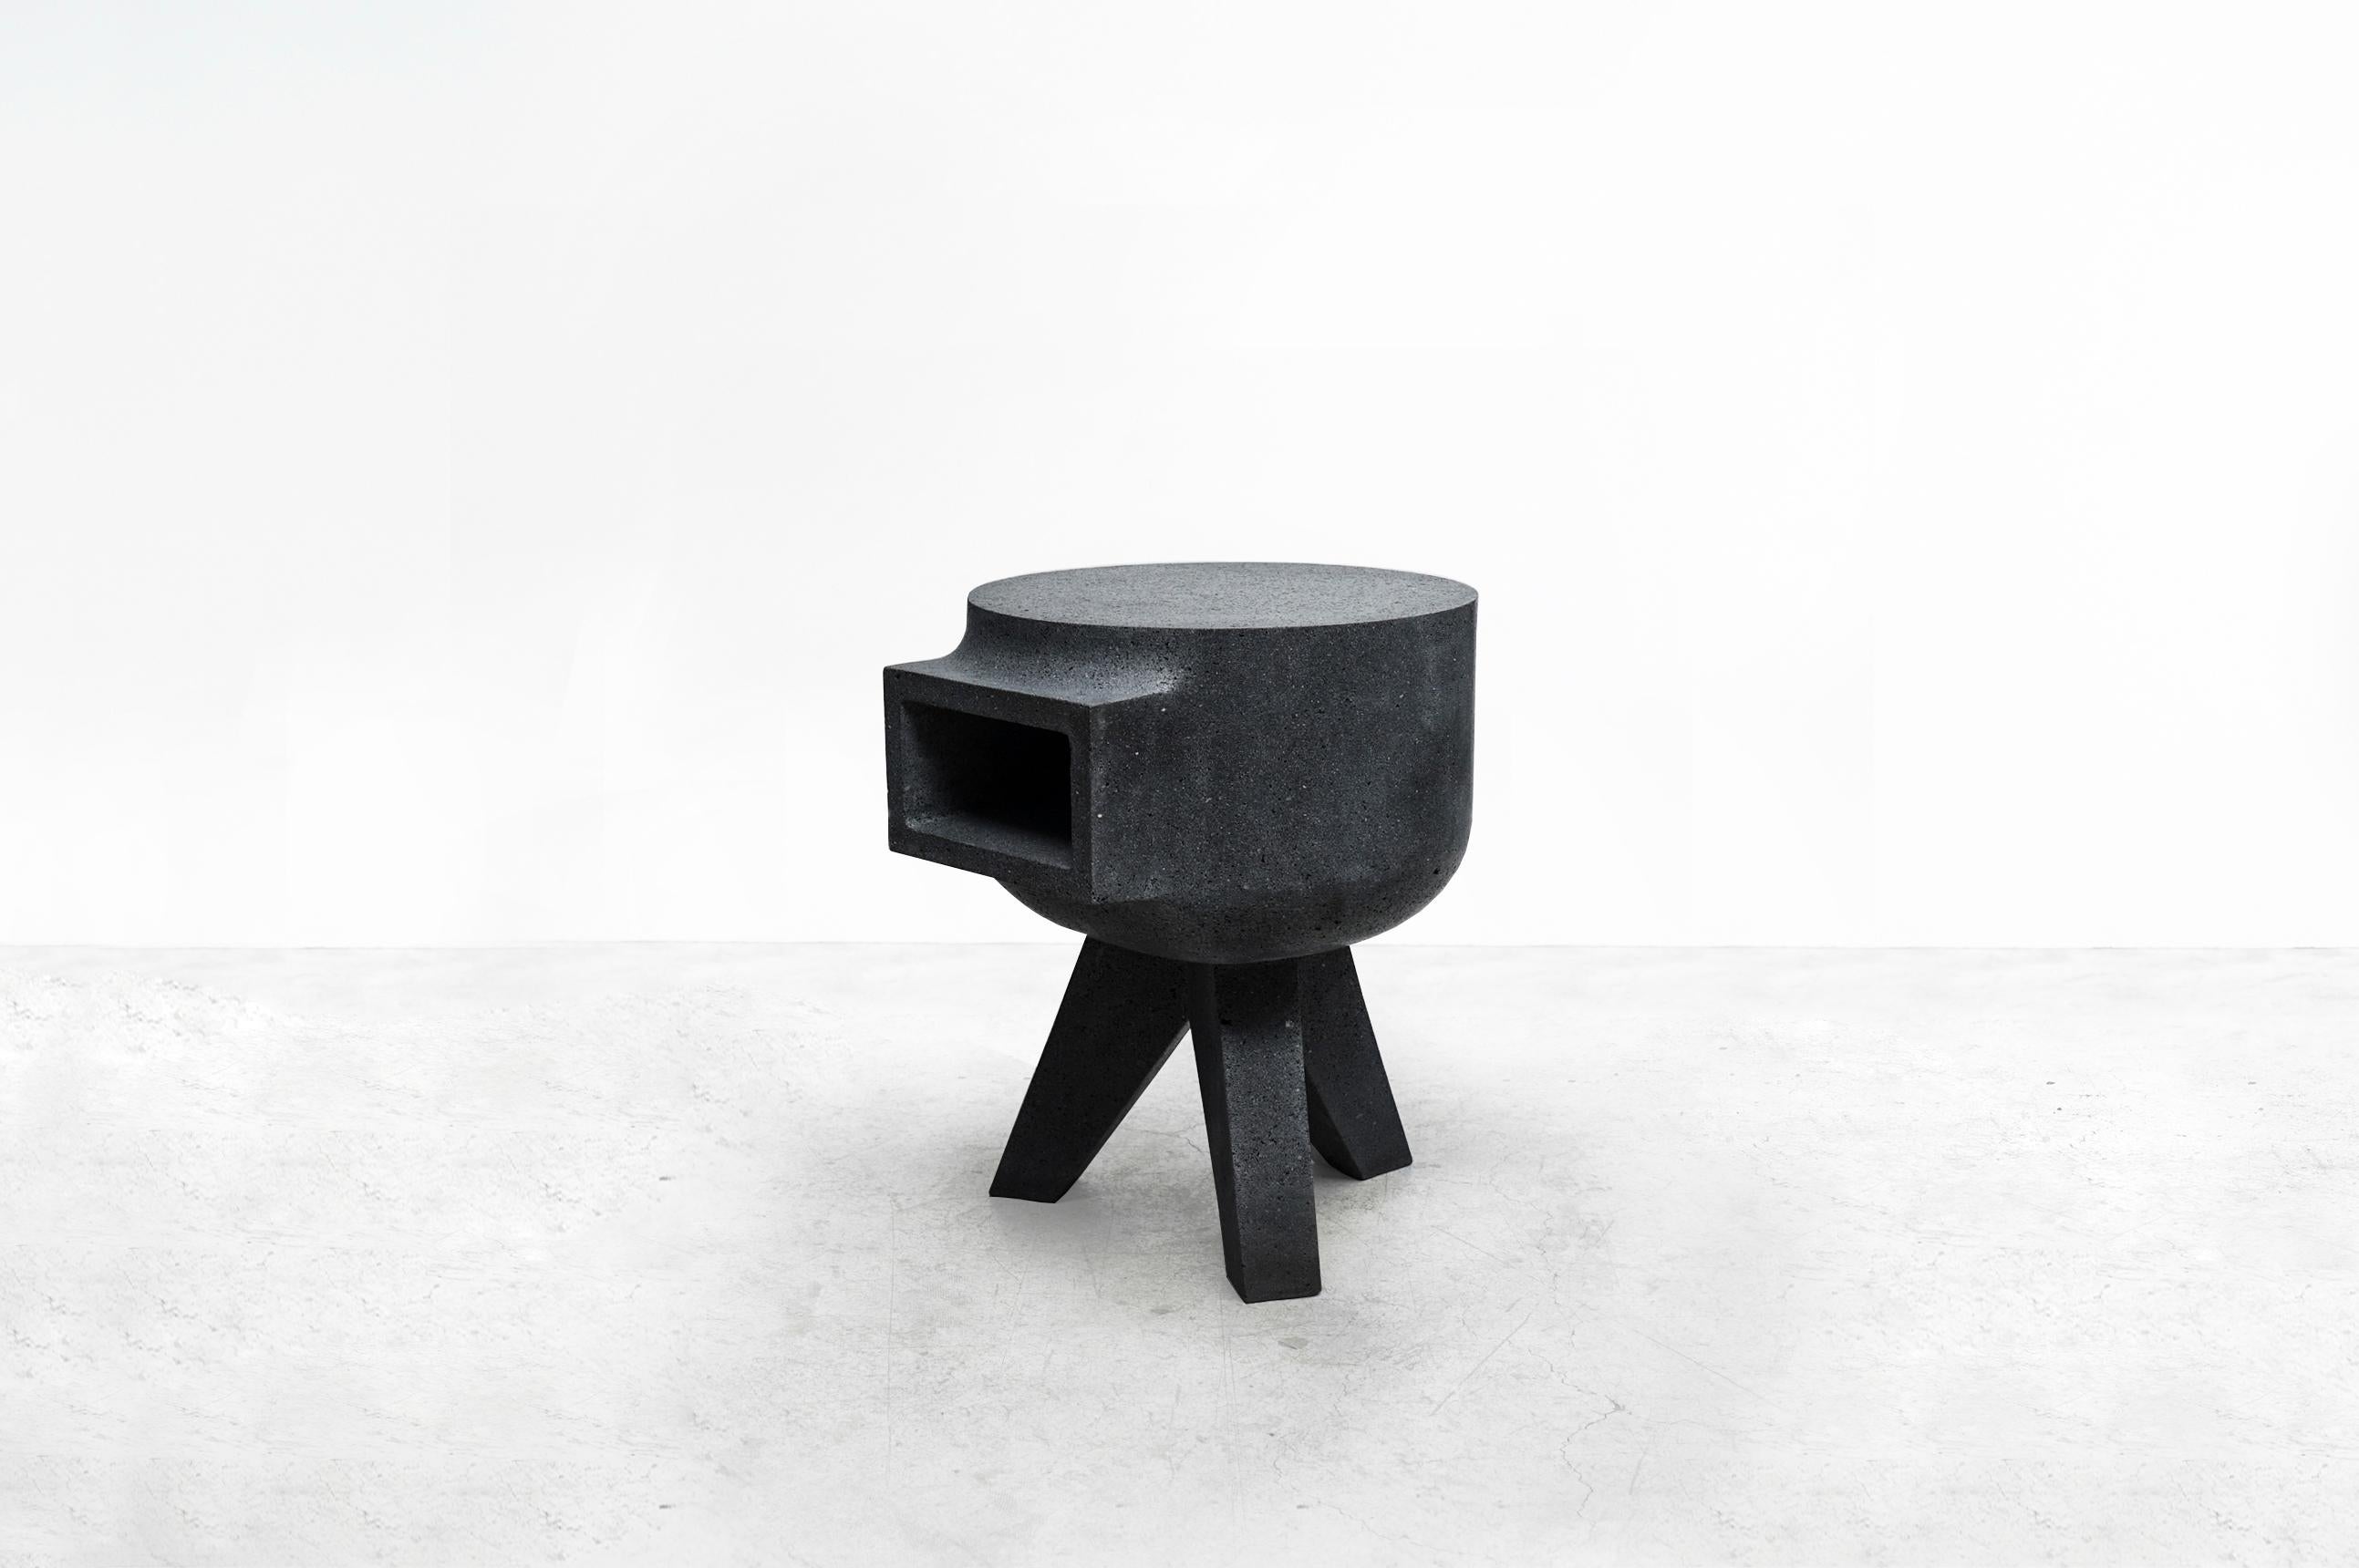 Pedro Reyes Contemporary Design Tripod Table Black Volcanic Stone Mexico 2018 1